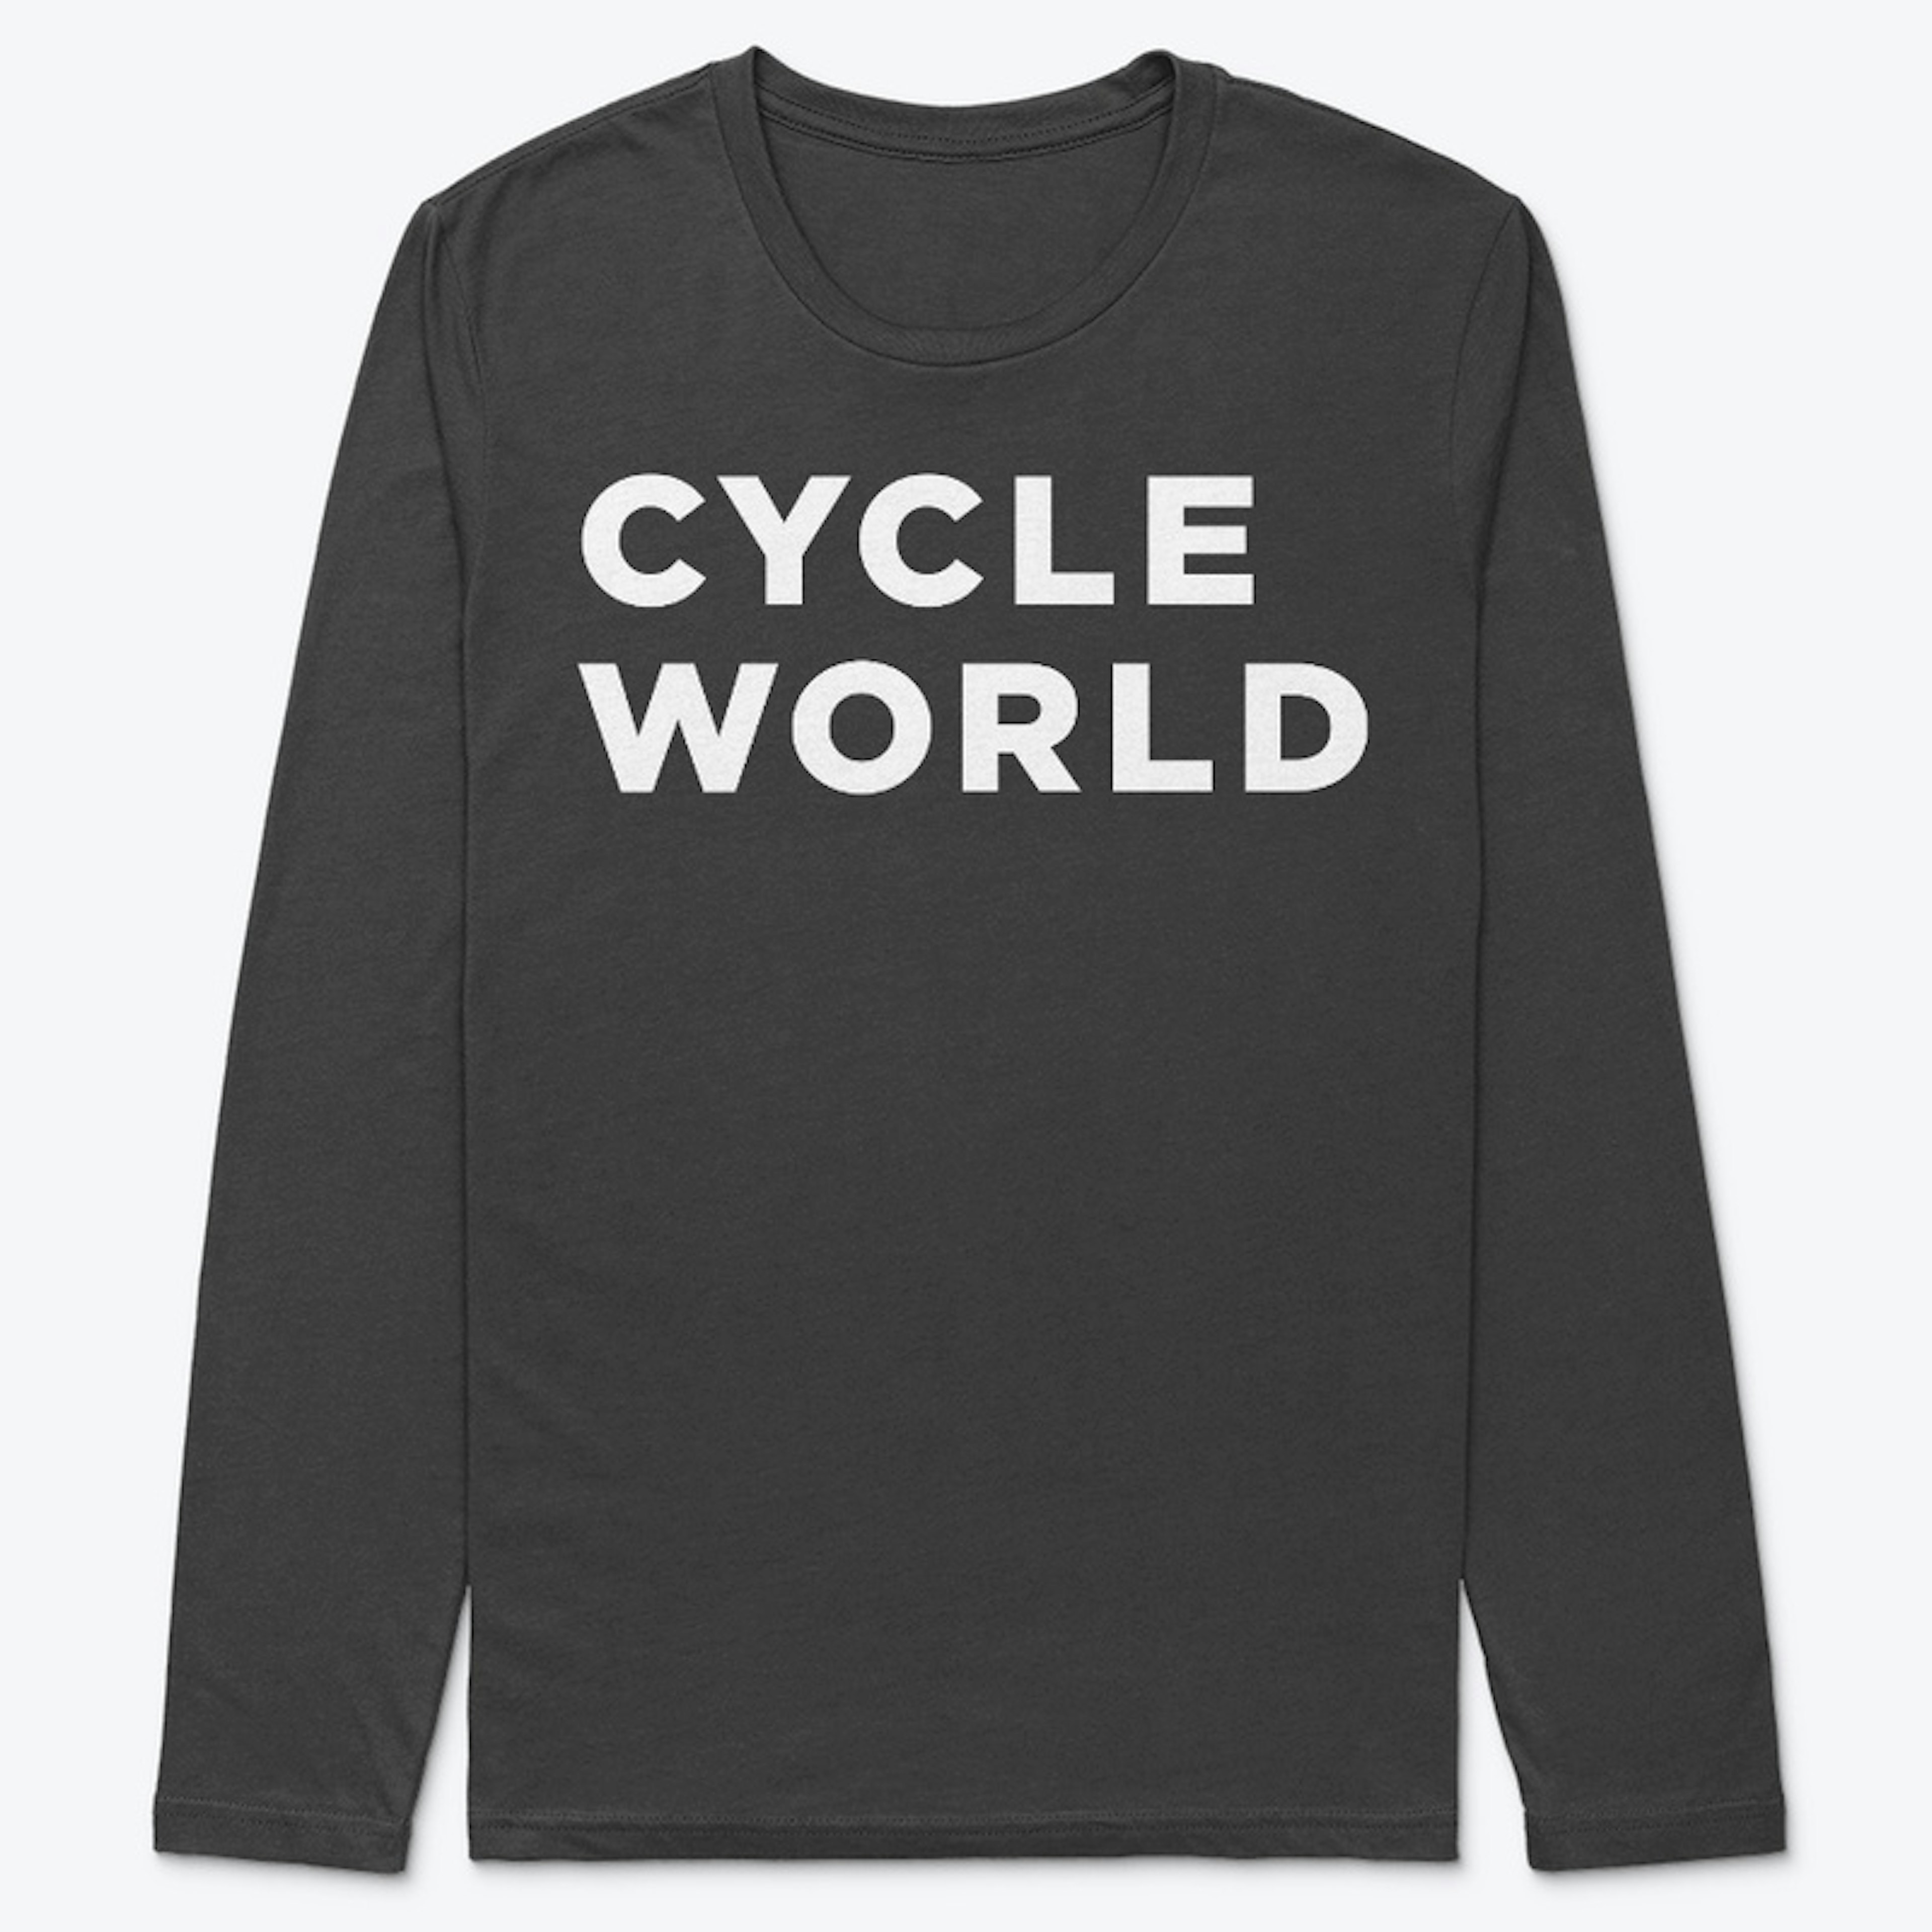 Cycle World White on Black